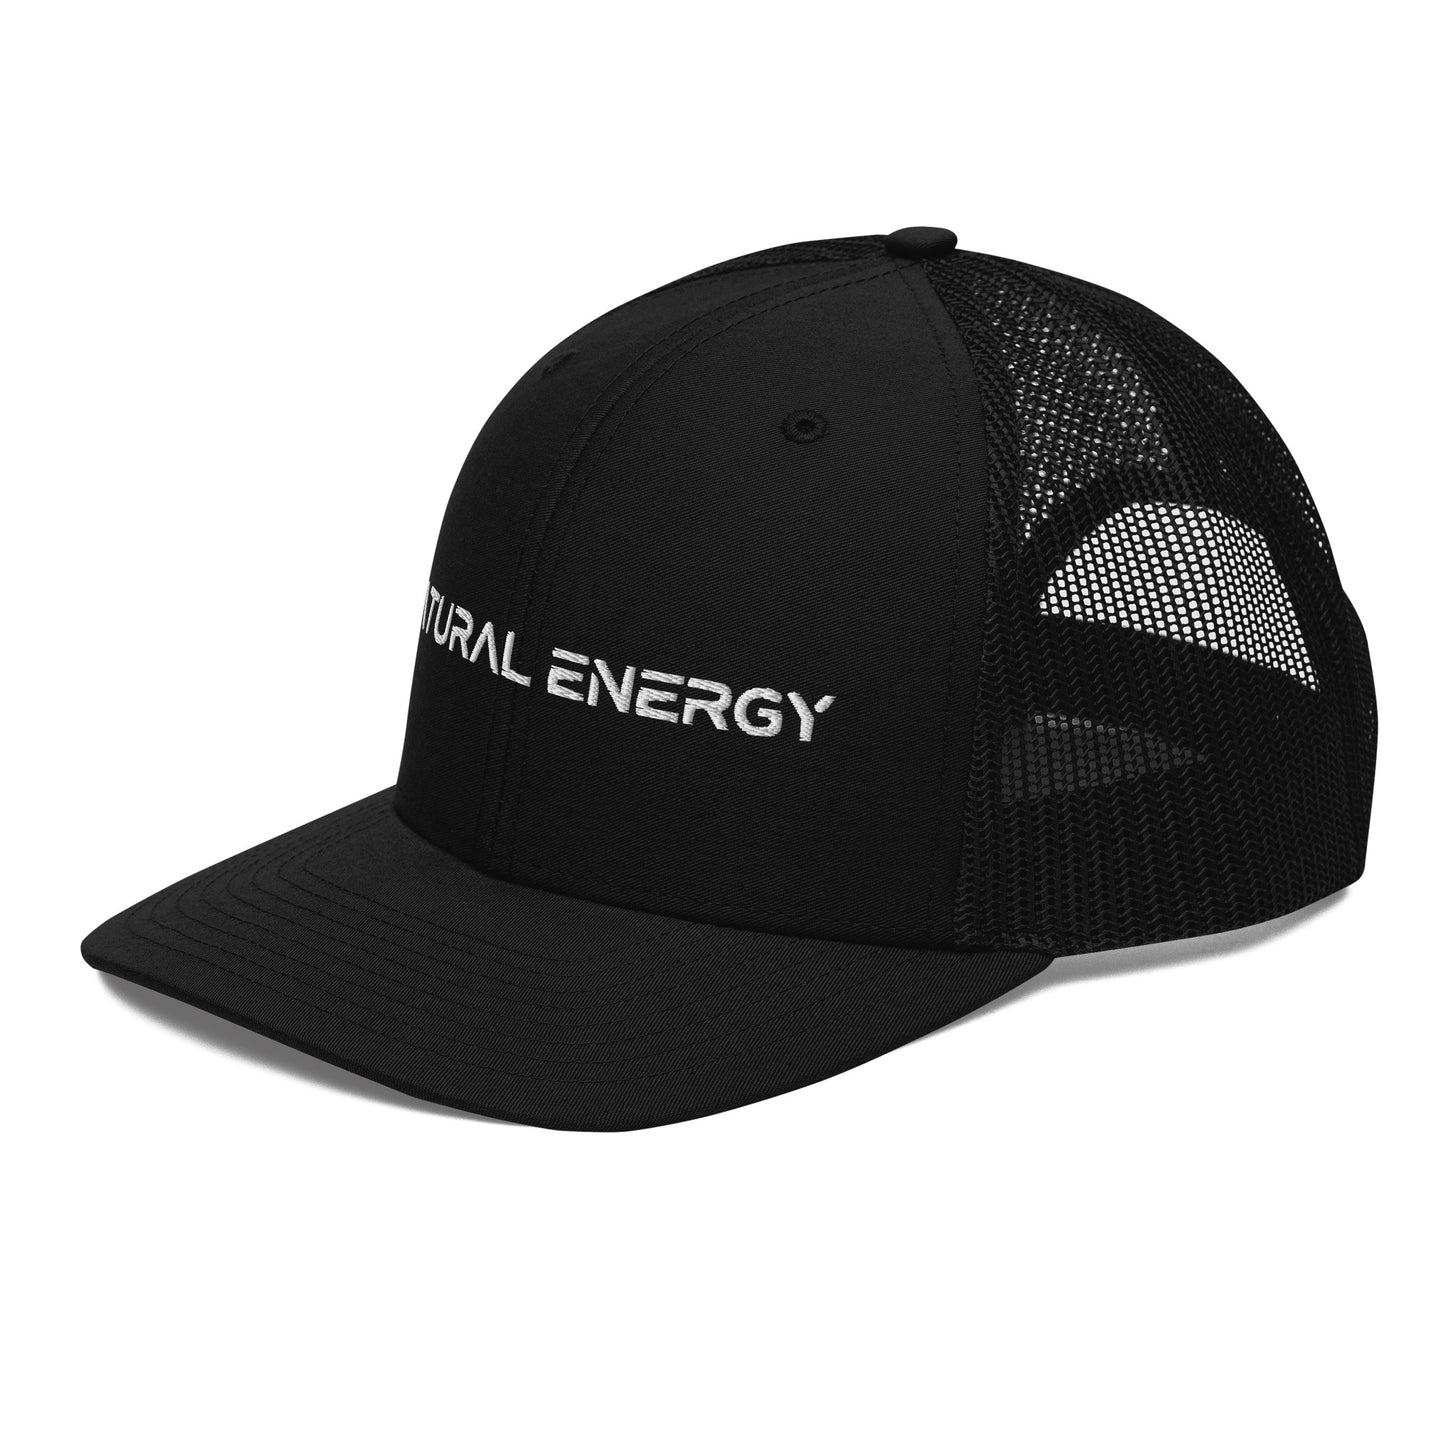 Natural Energy Knocking Hat